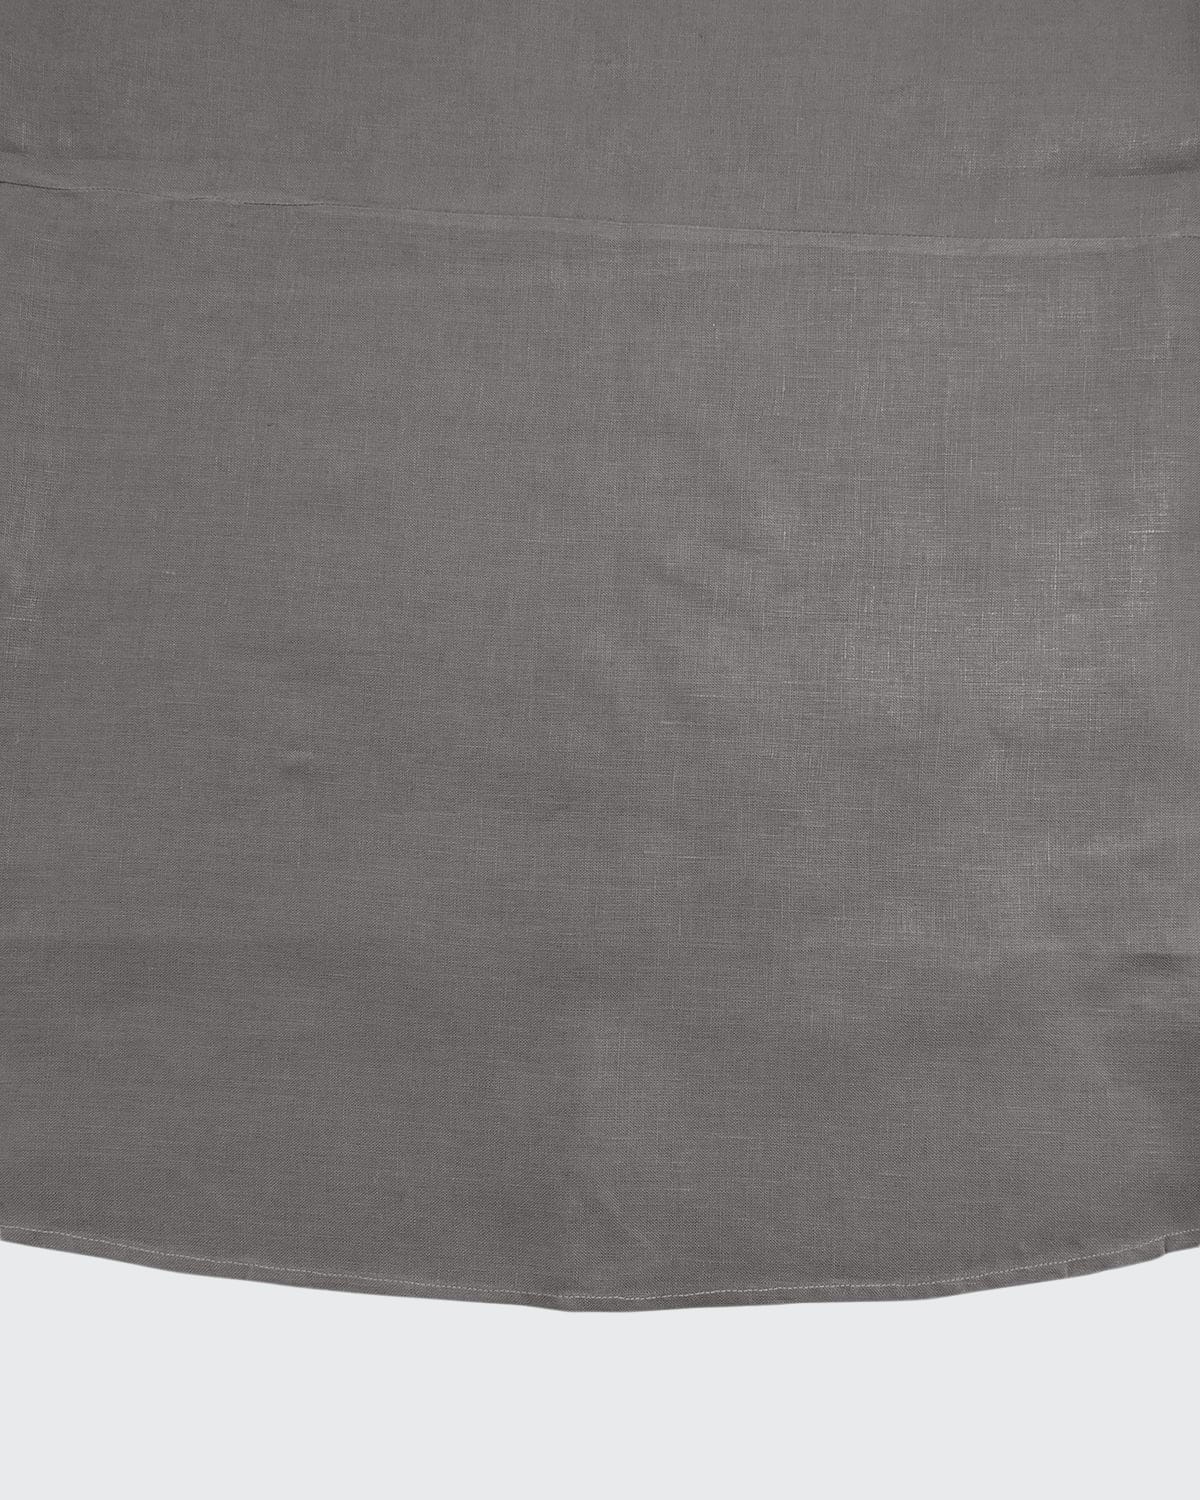 Sferra Hemstitch Round Tablecloth, 90"dia. In Grey